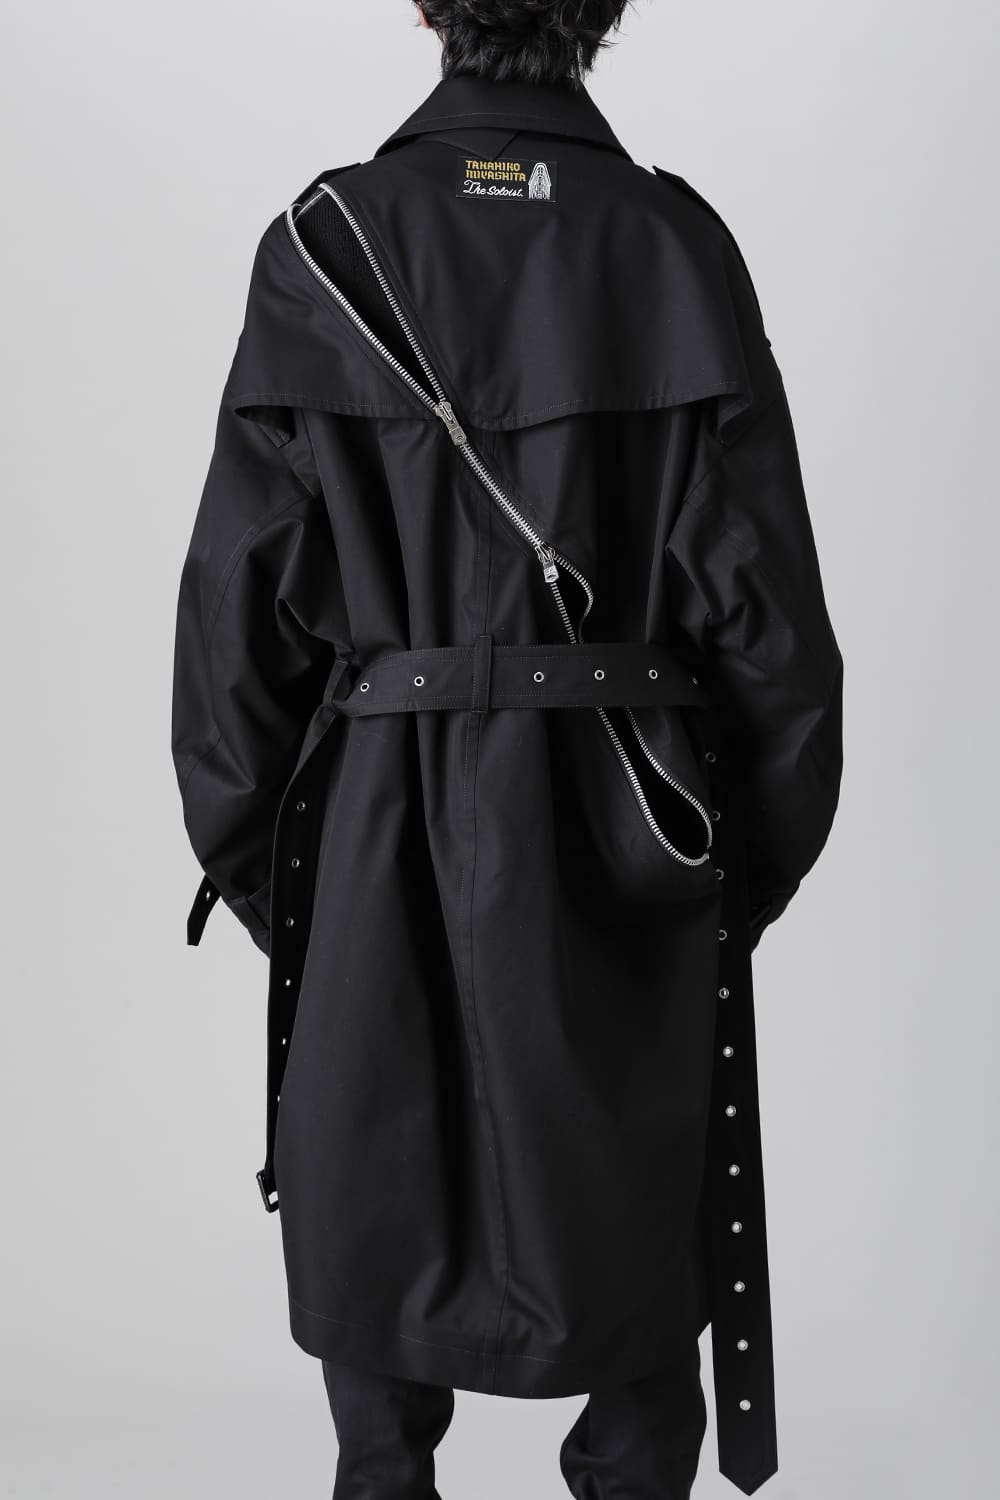 Faiz T.S Heavyweight Kyoto Robe - Black - VW05